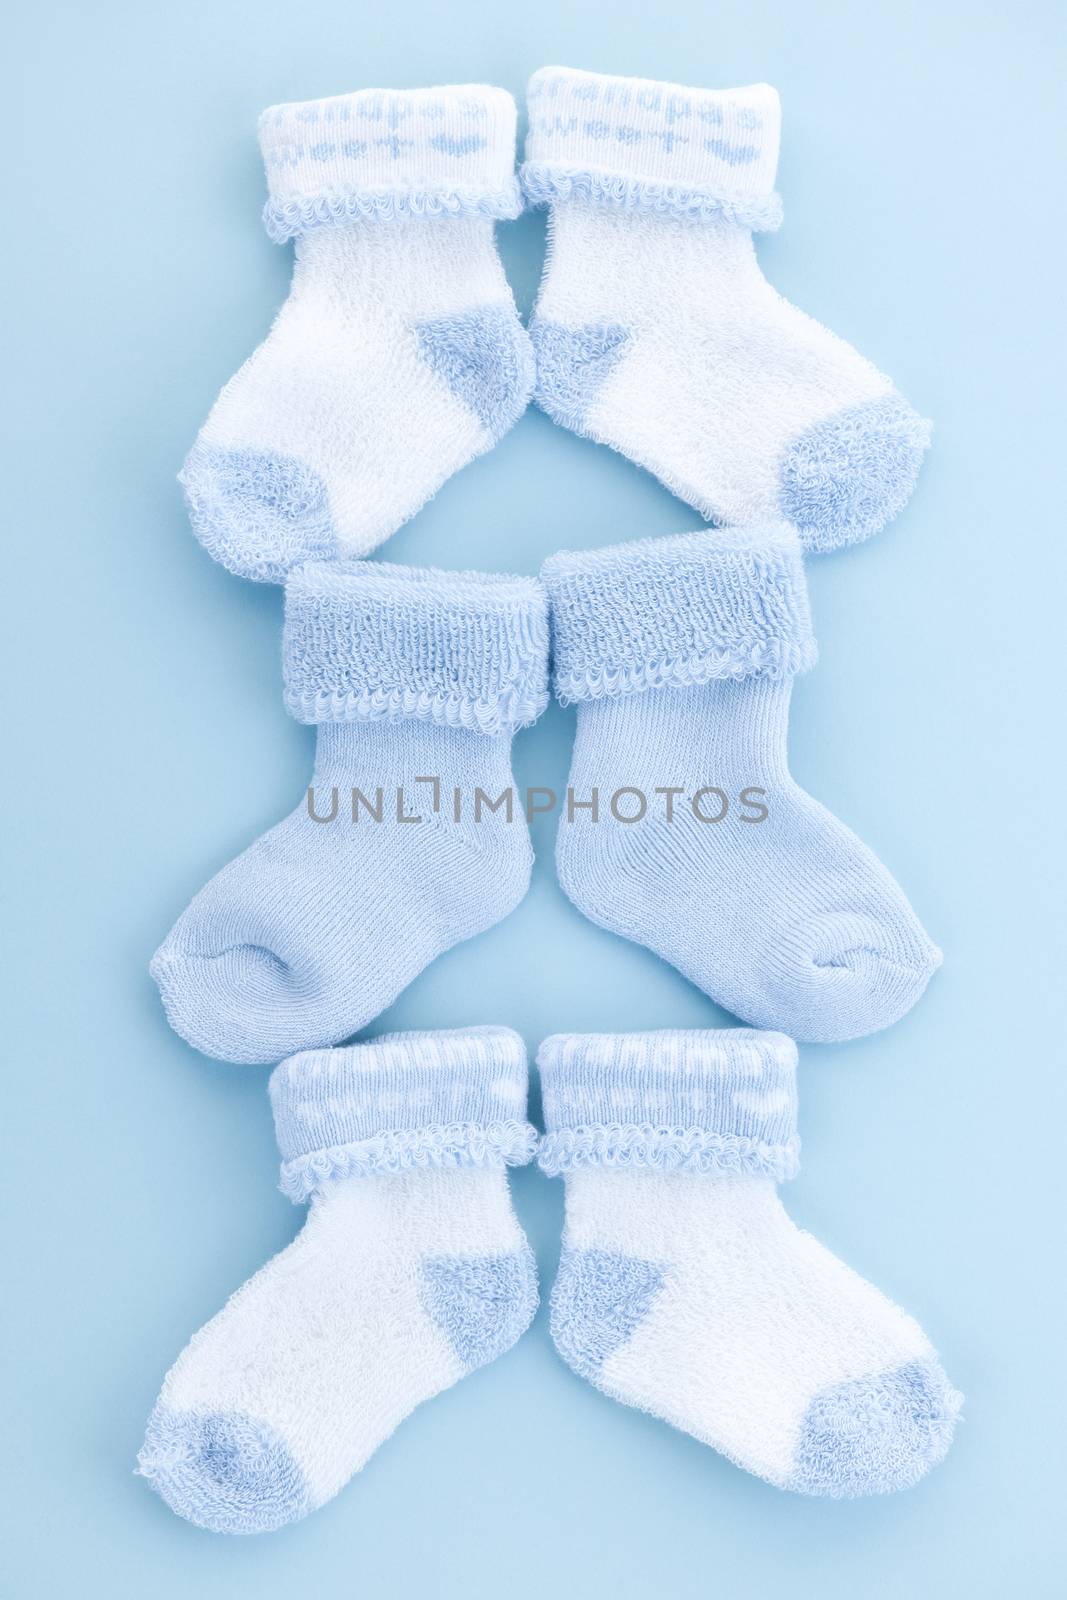 Blue baby socks by elenathewise